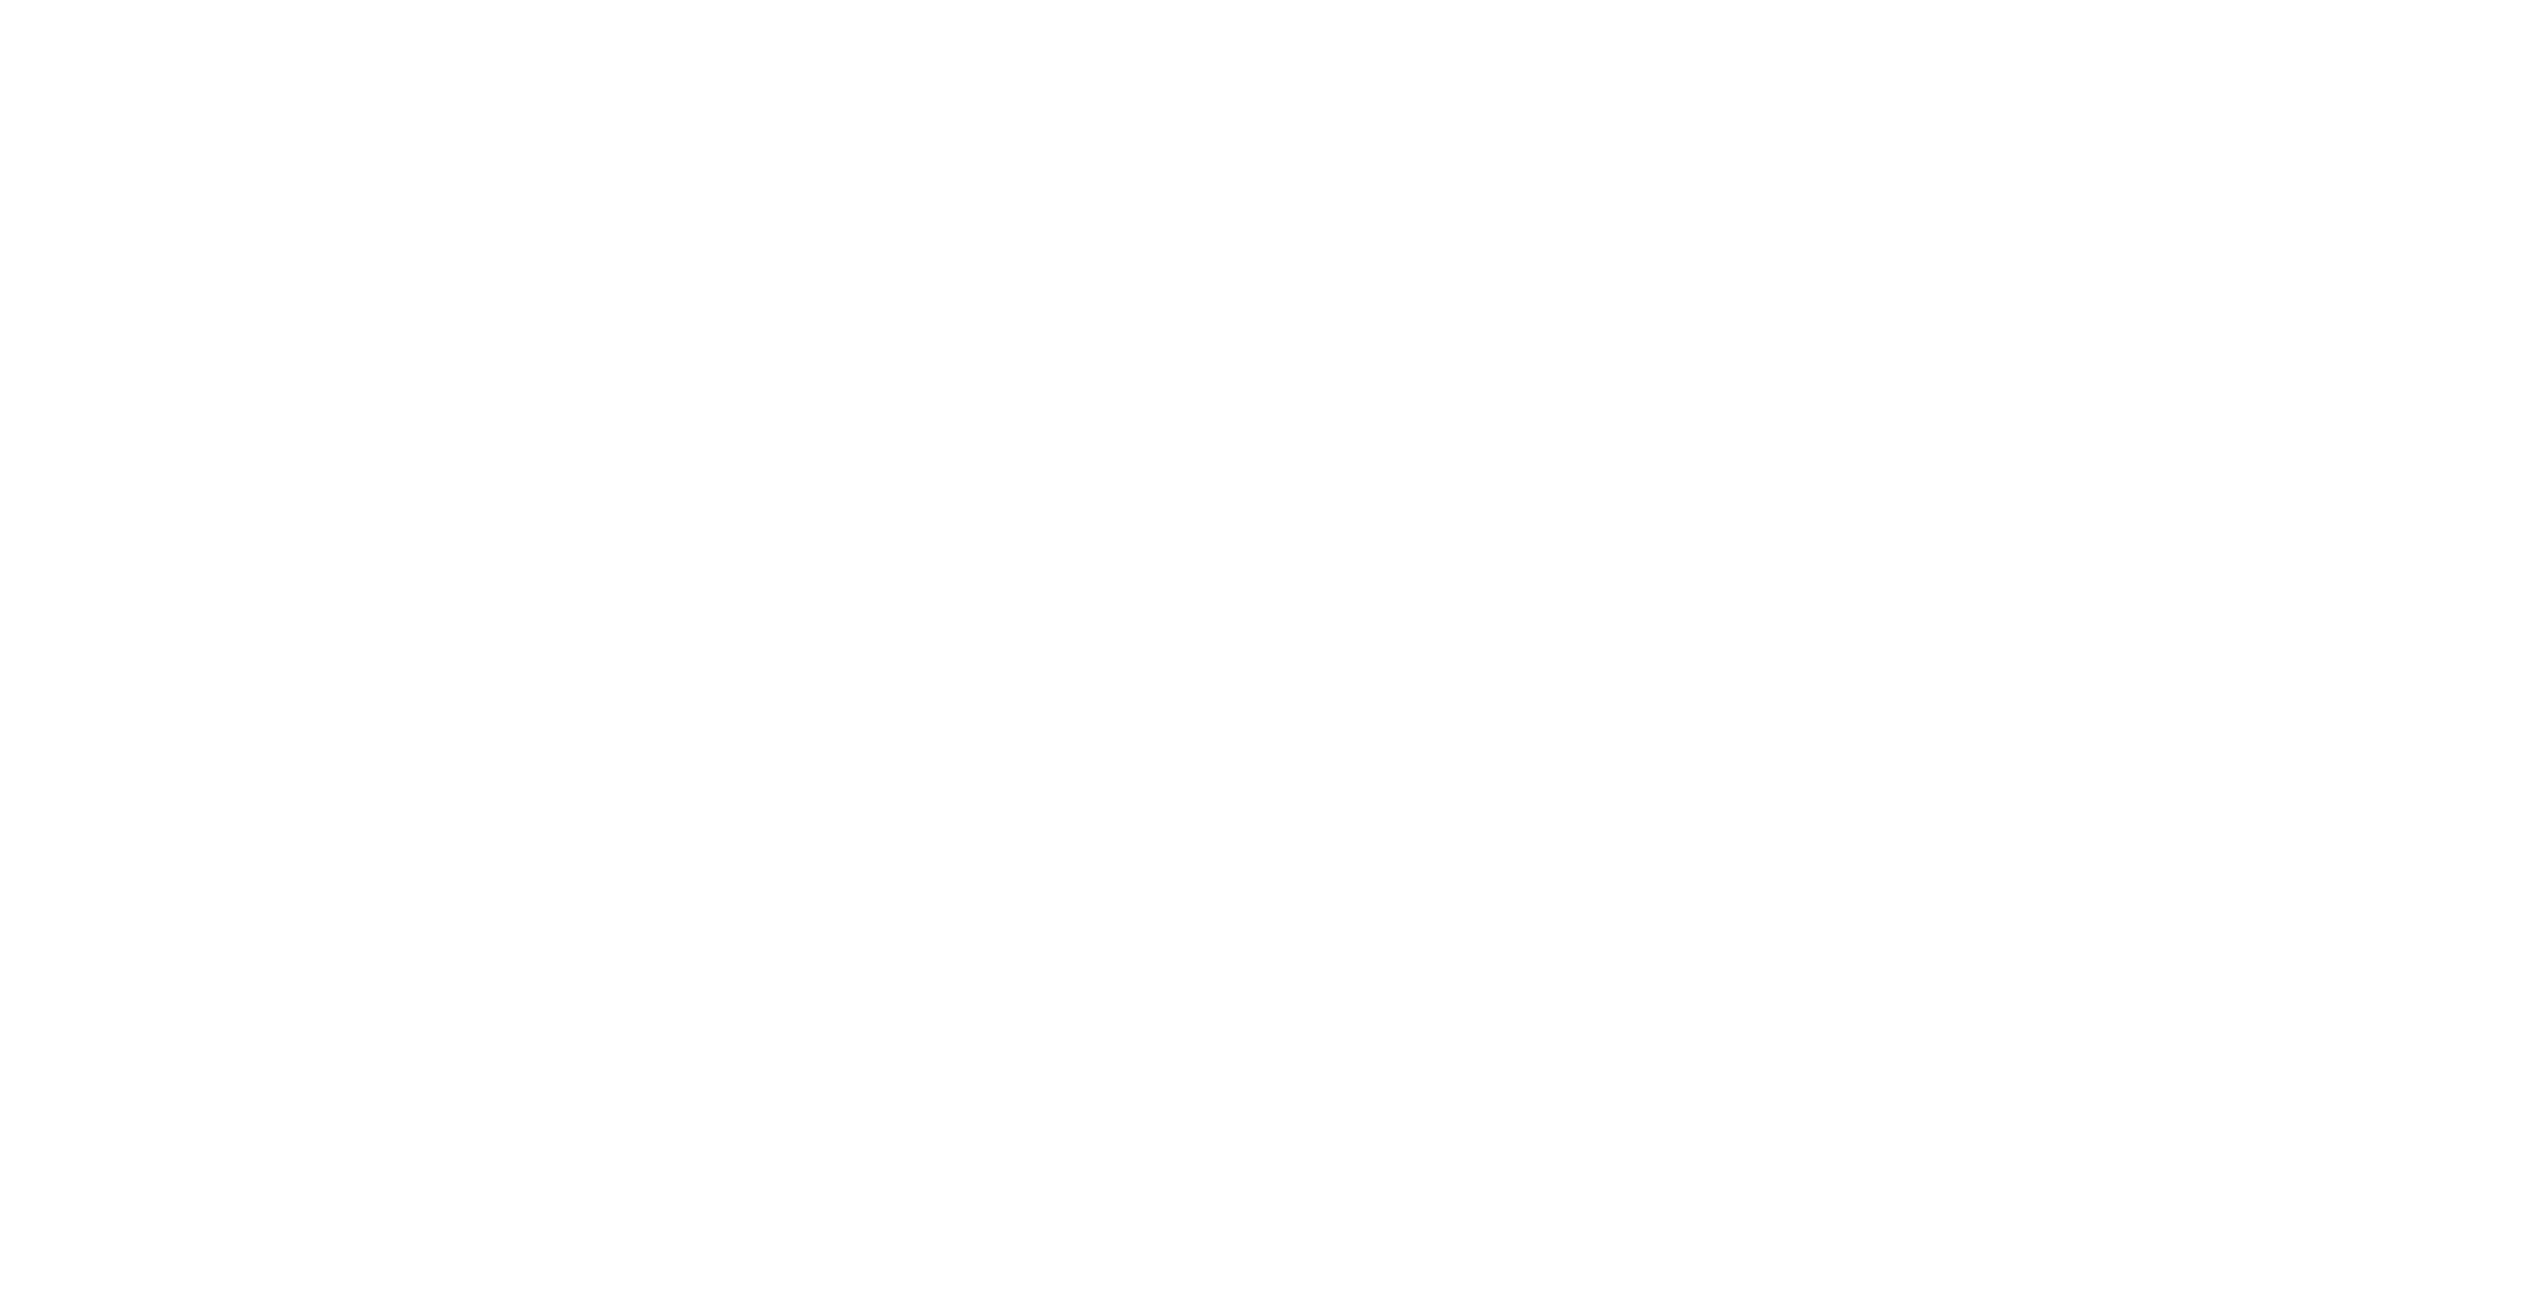 Big Brother Reindeer Games logo